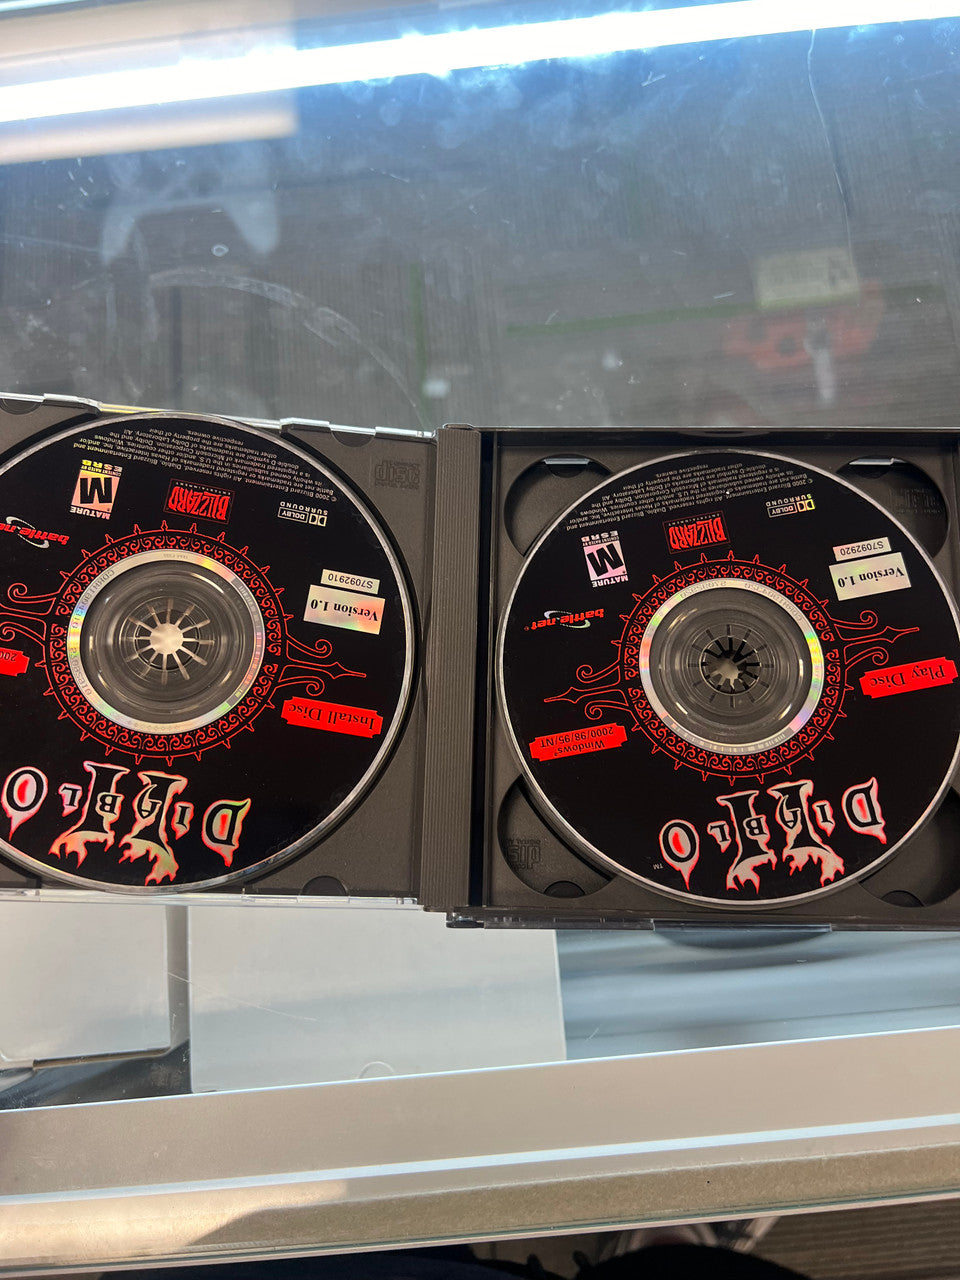 Diablo II 2 (PC) Blizzard Entertainment - 3 Discs + Jewel Case